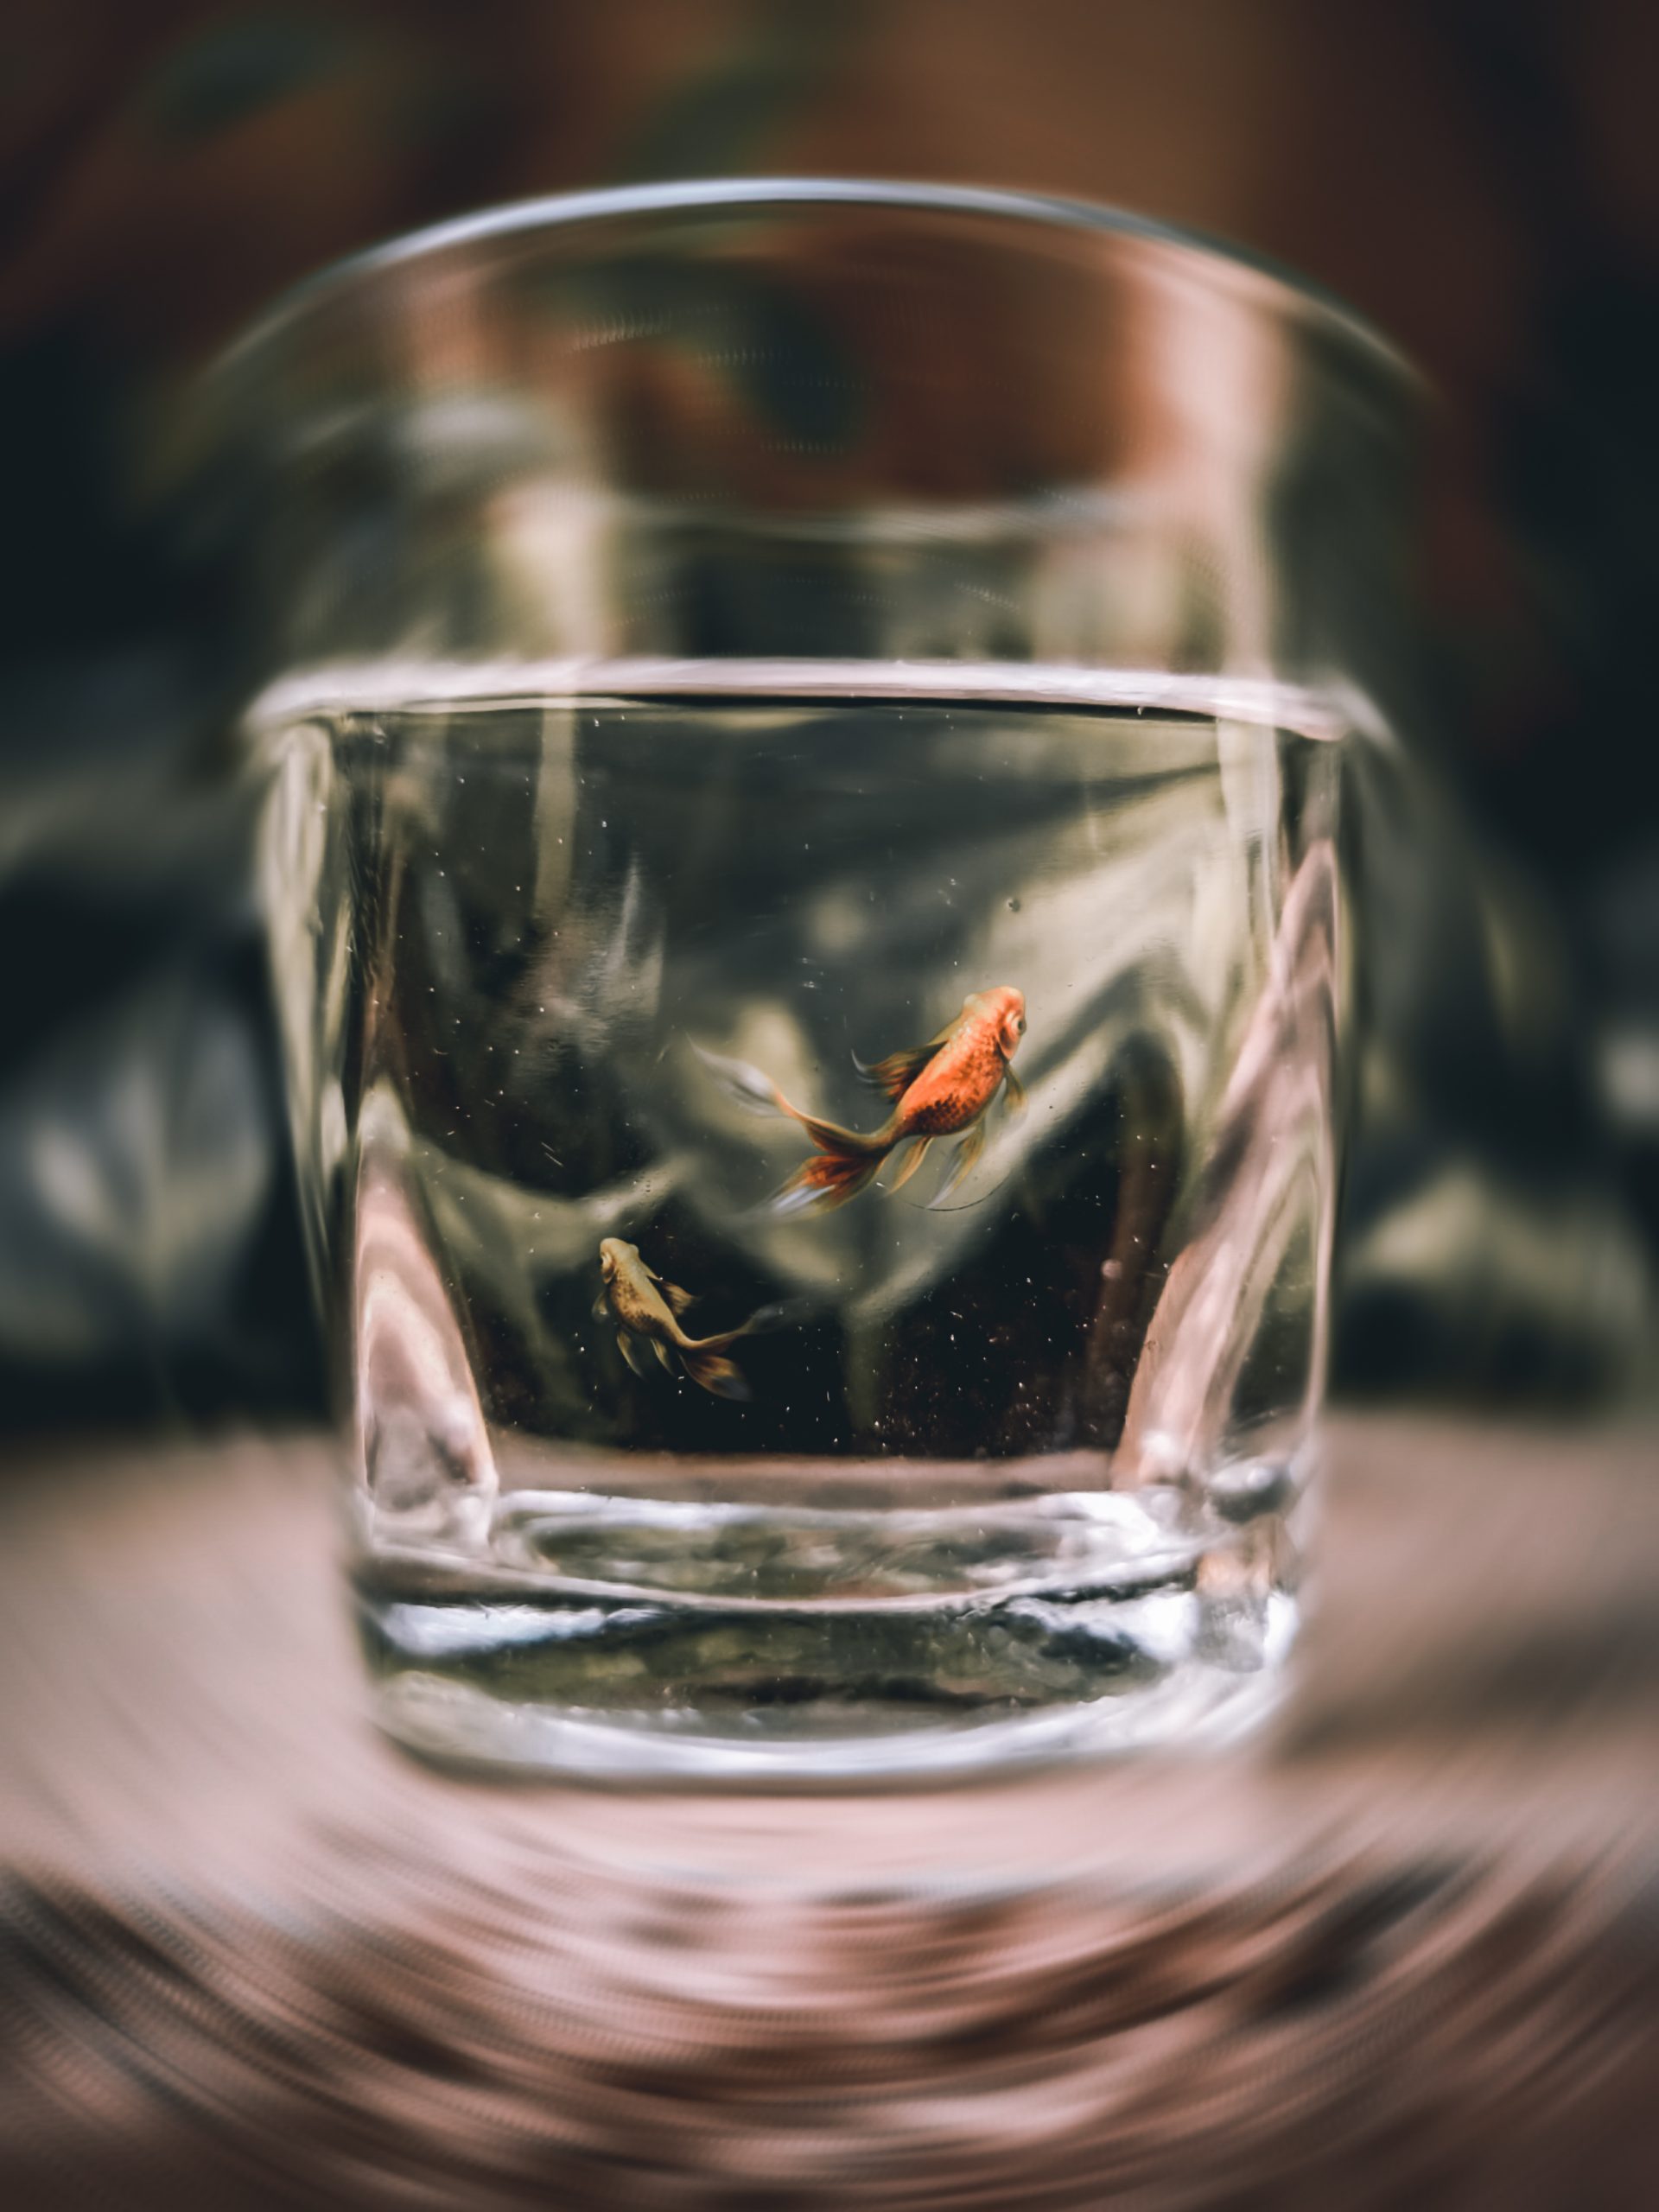 Fish in glass